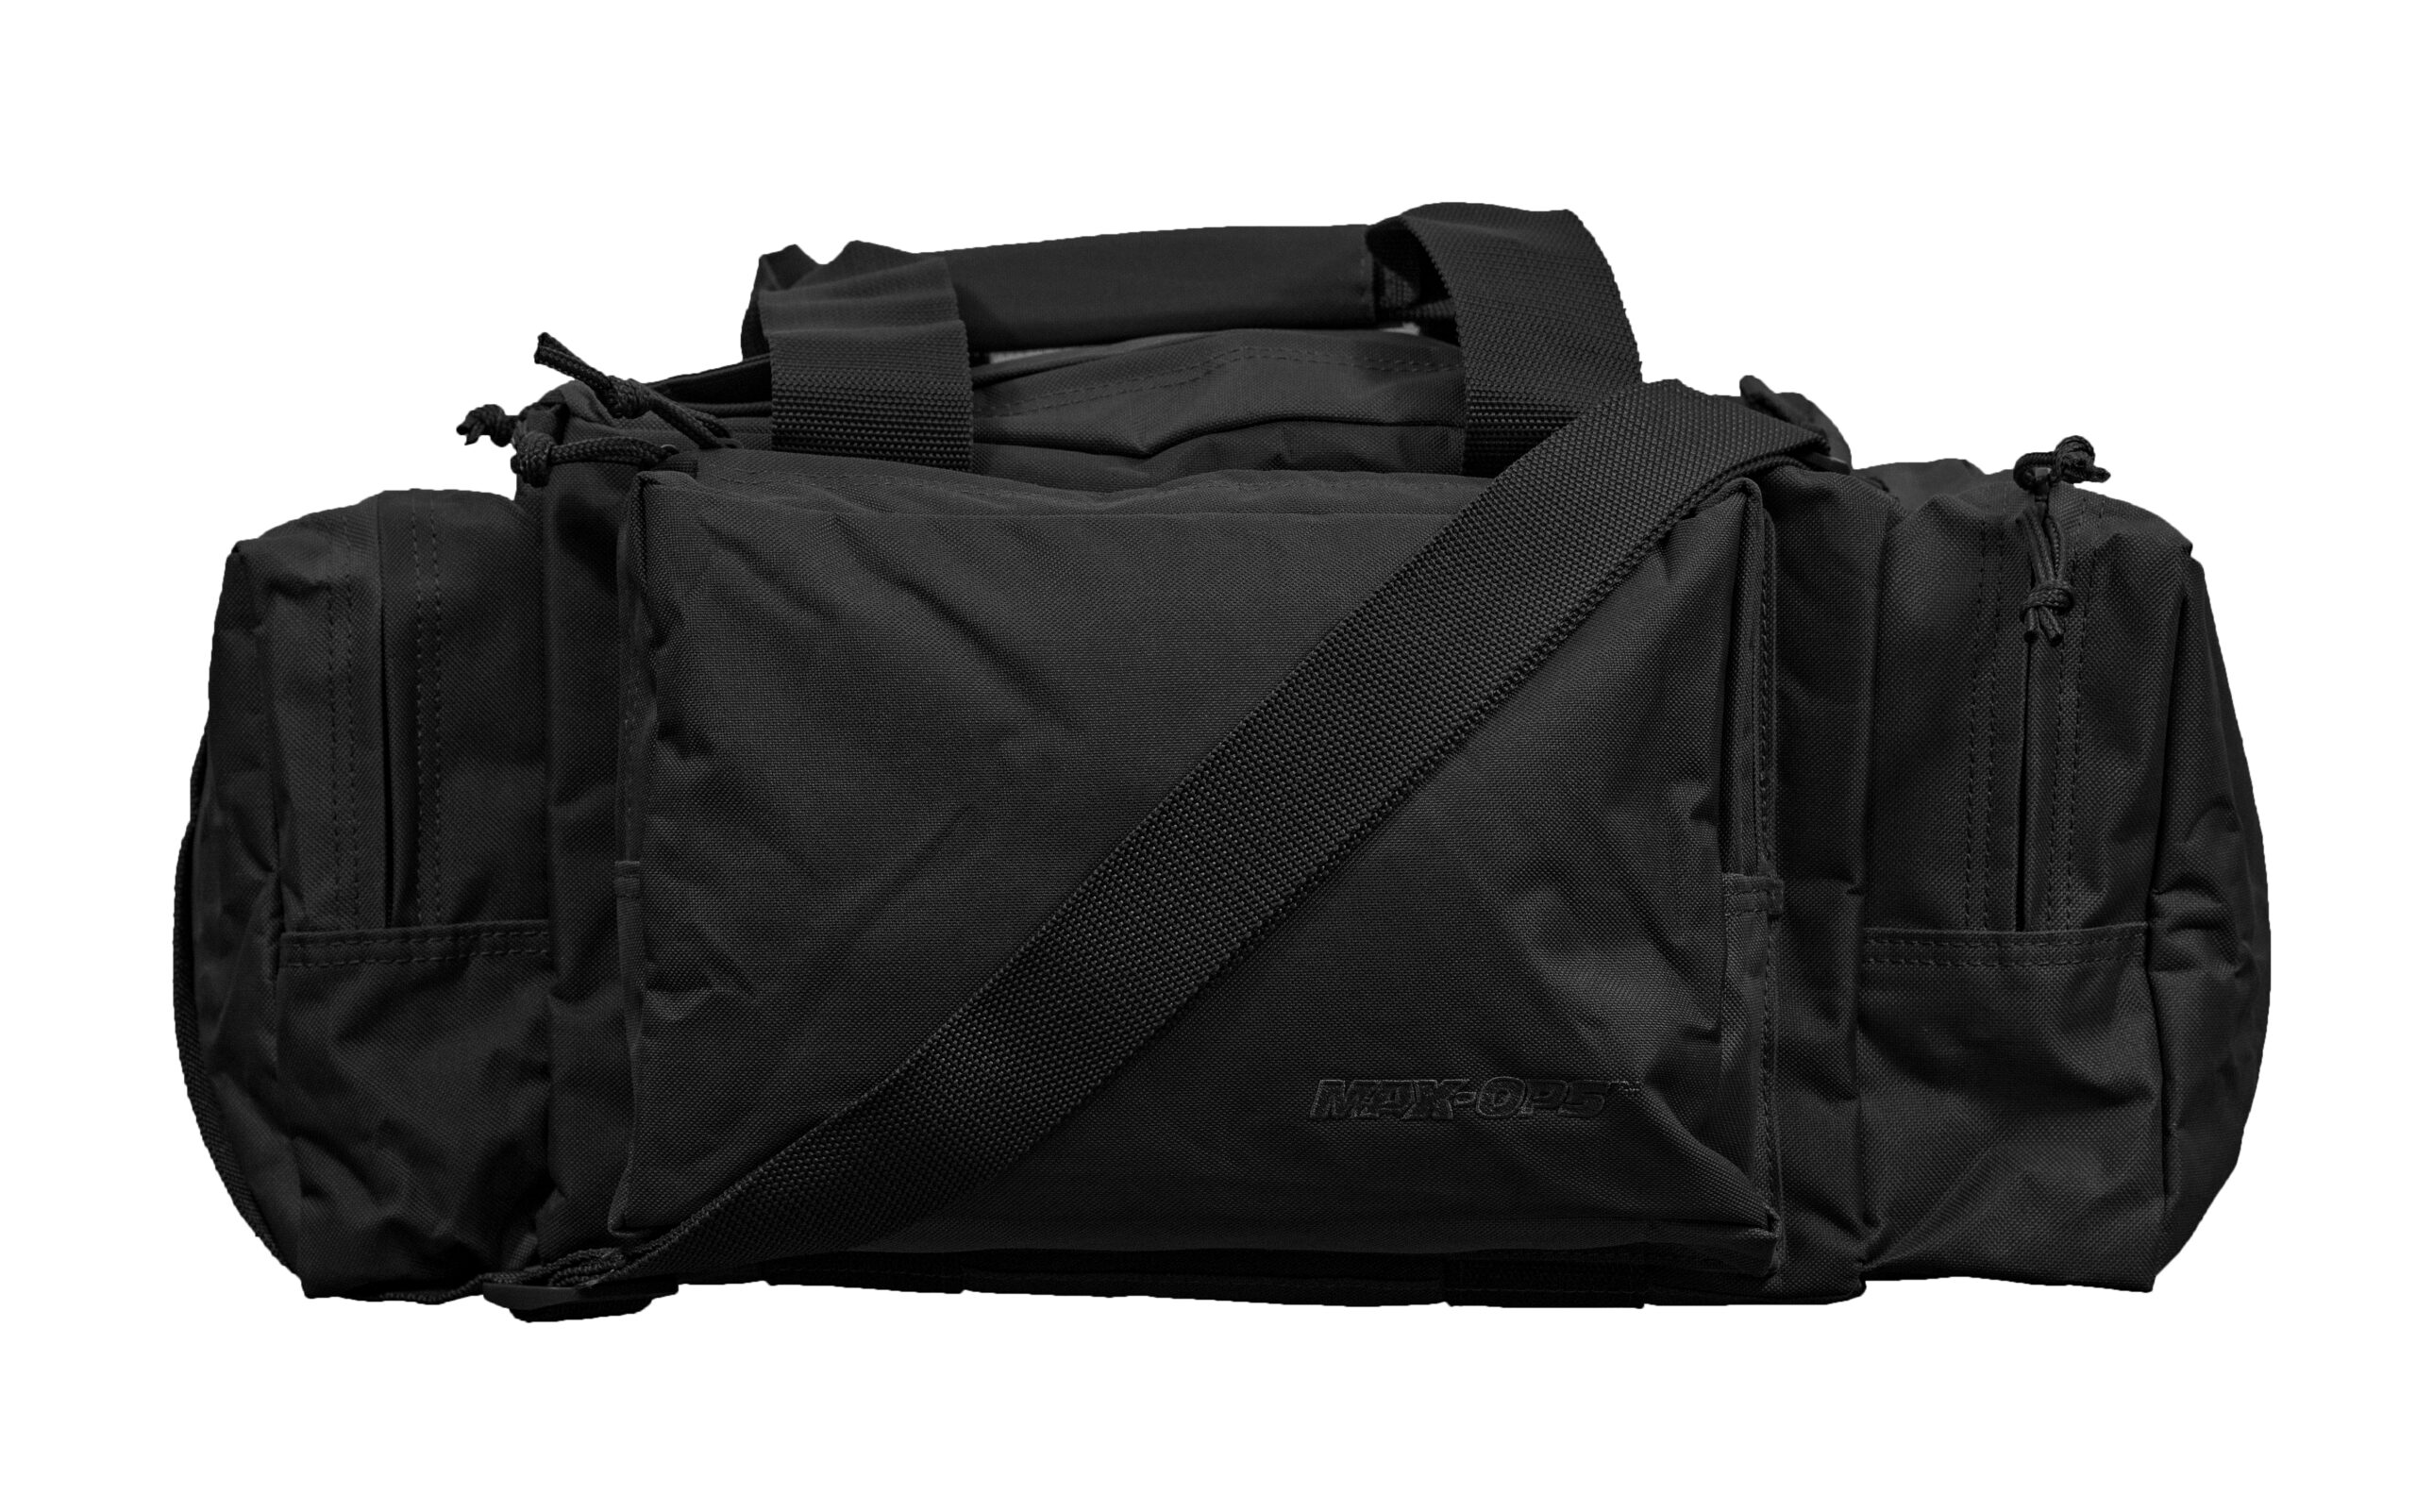 DeMarini Black OPS Wheeled Bag Review | BatDigest.com